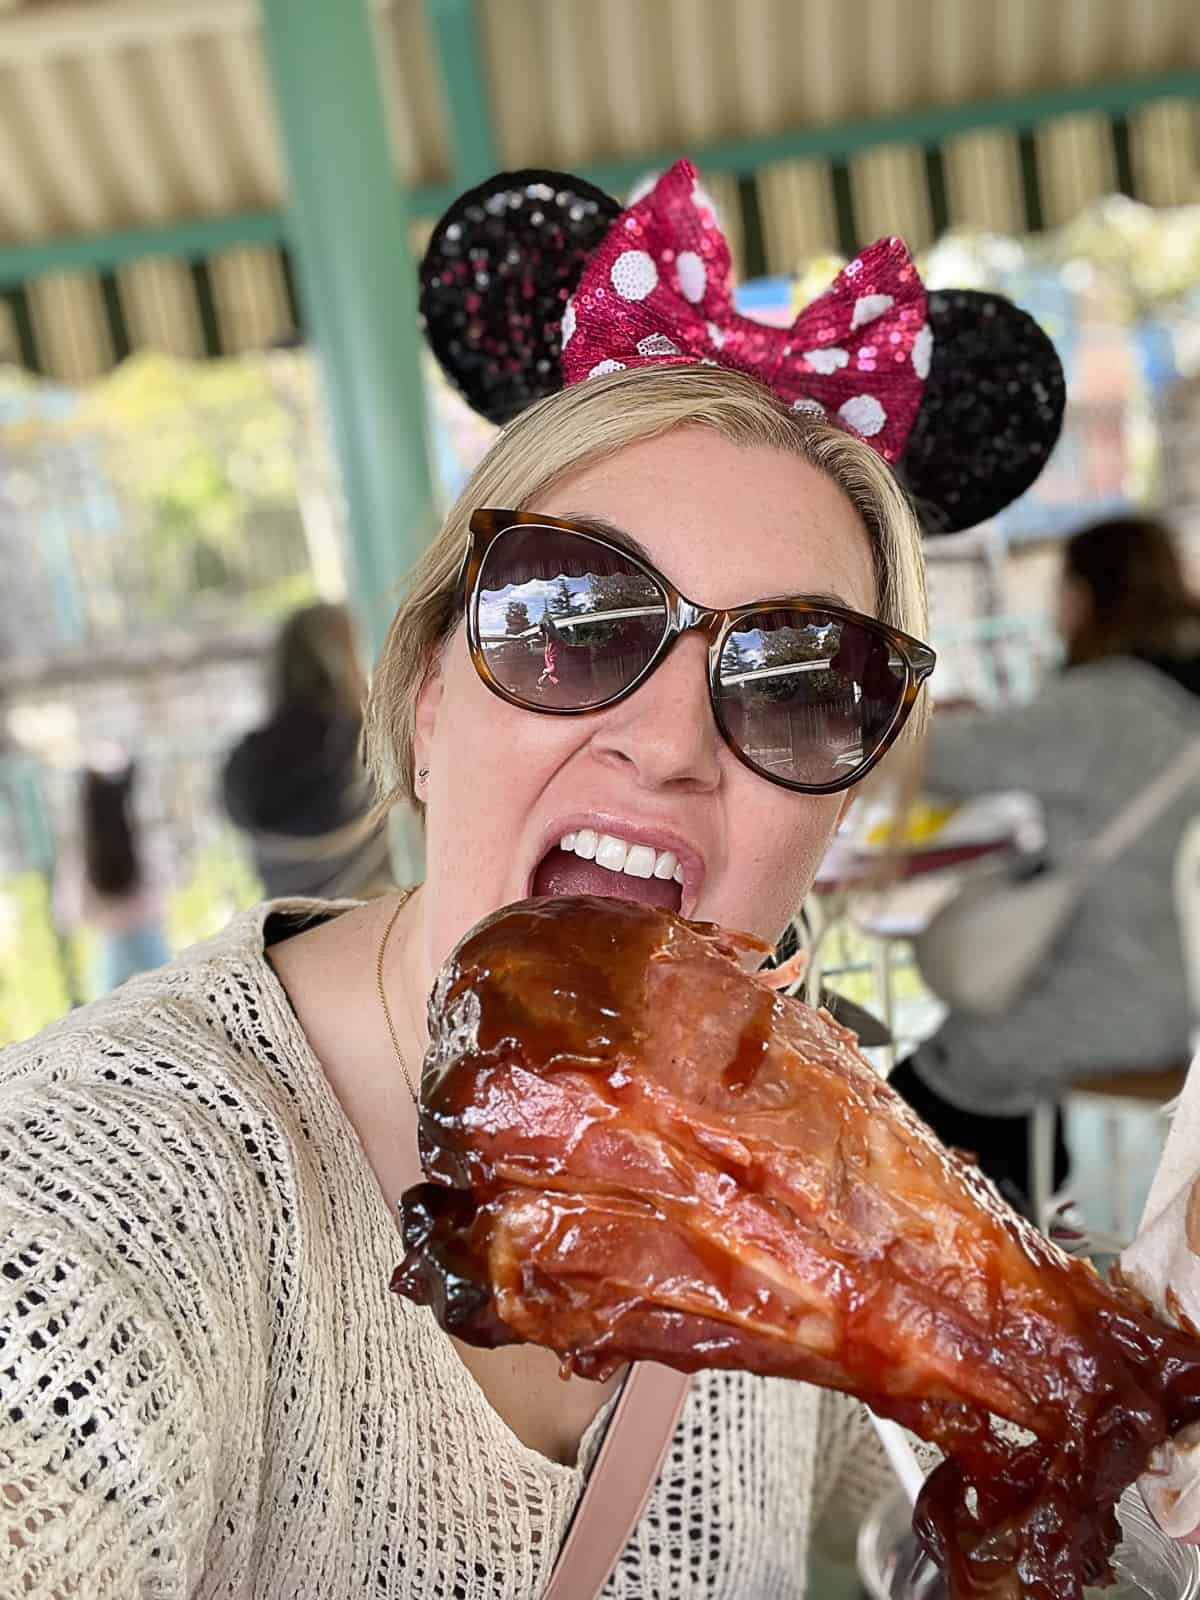 Jenna Passaro food blogger eating famouse smoked bbq Disney turkey leg recipe